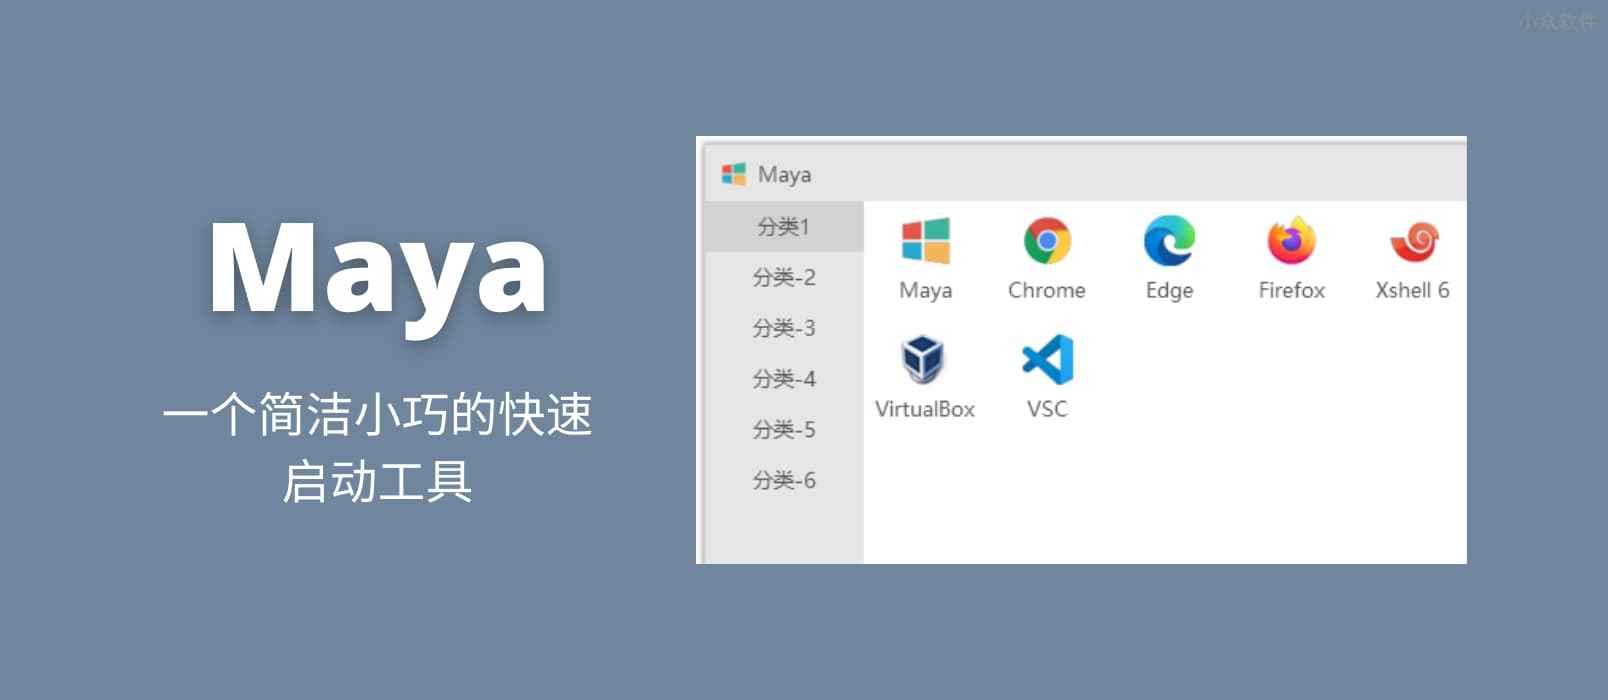 Maya - 一个简洁小巧的快速启动工具[Windows]